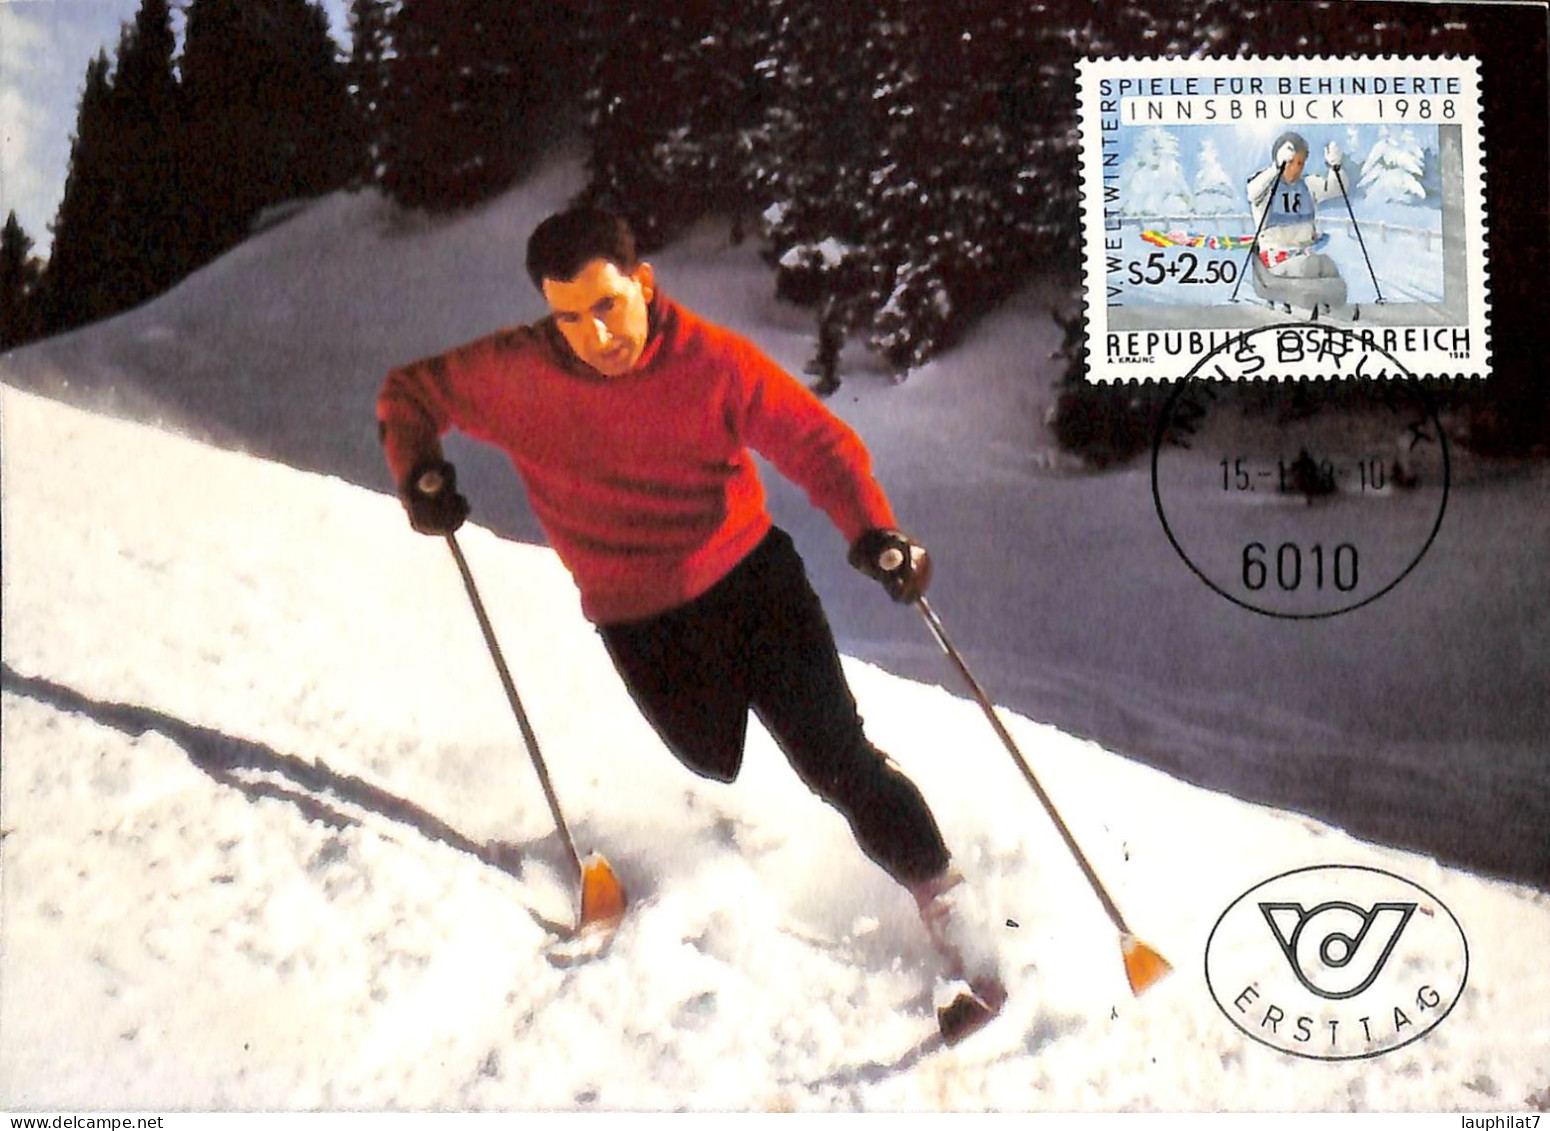 [500013]B/TB//-Autriche 1988 - 6010 INNSBRUCK, Sports, Ski - Maximumkarten (MC)